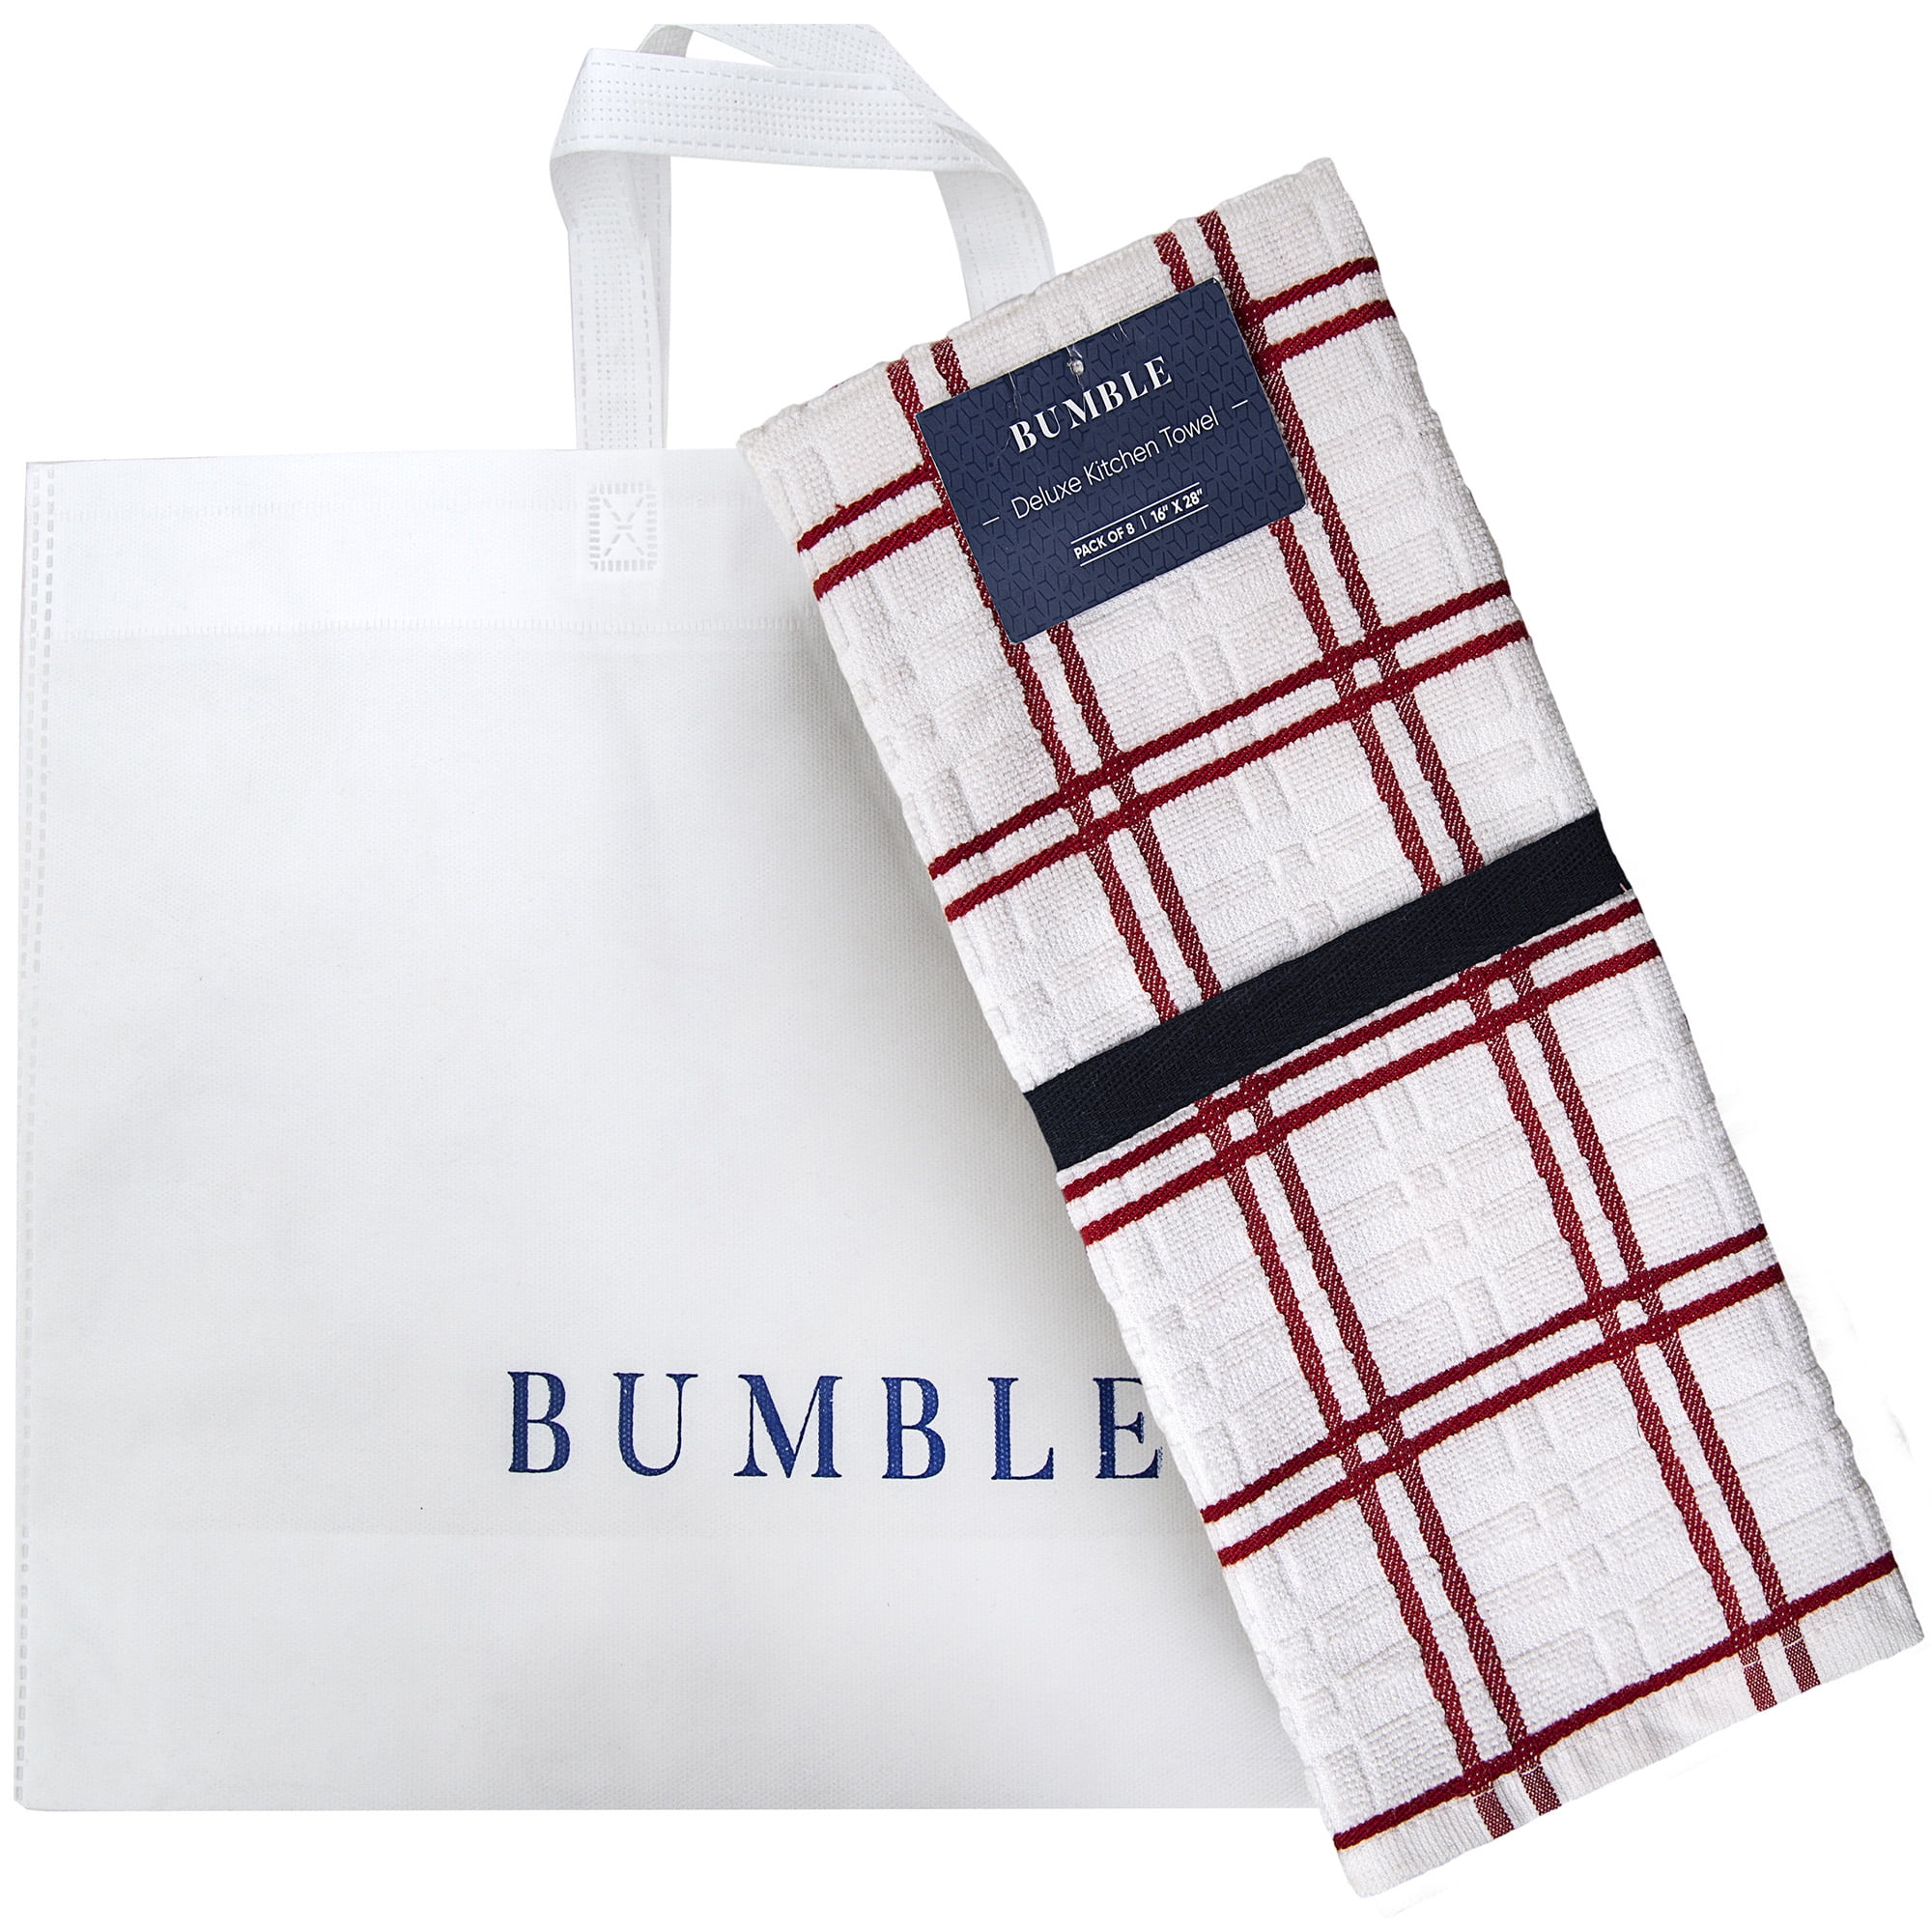 Bumble Bees Tea Towels X3 100% Cotton Decorative Kitchen Cooking